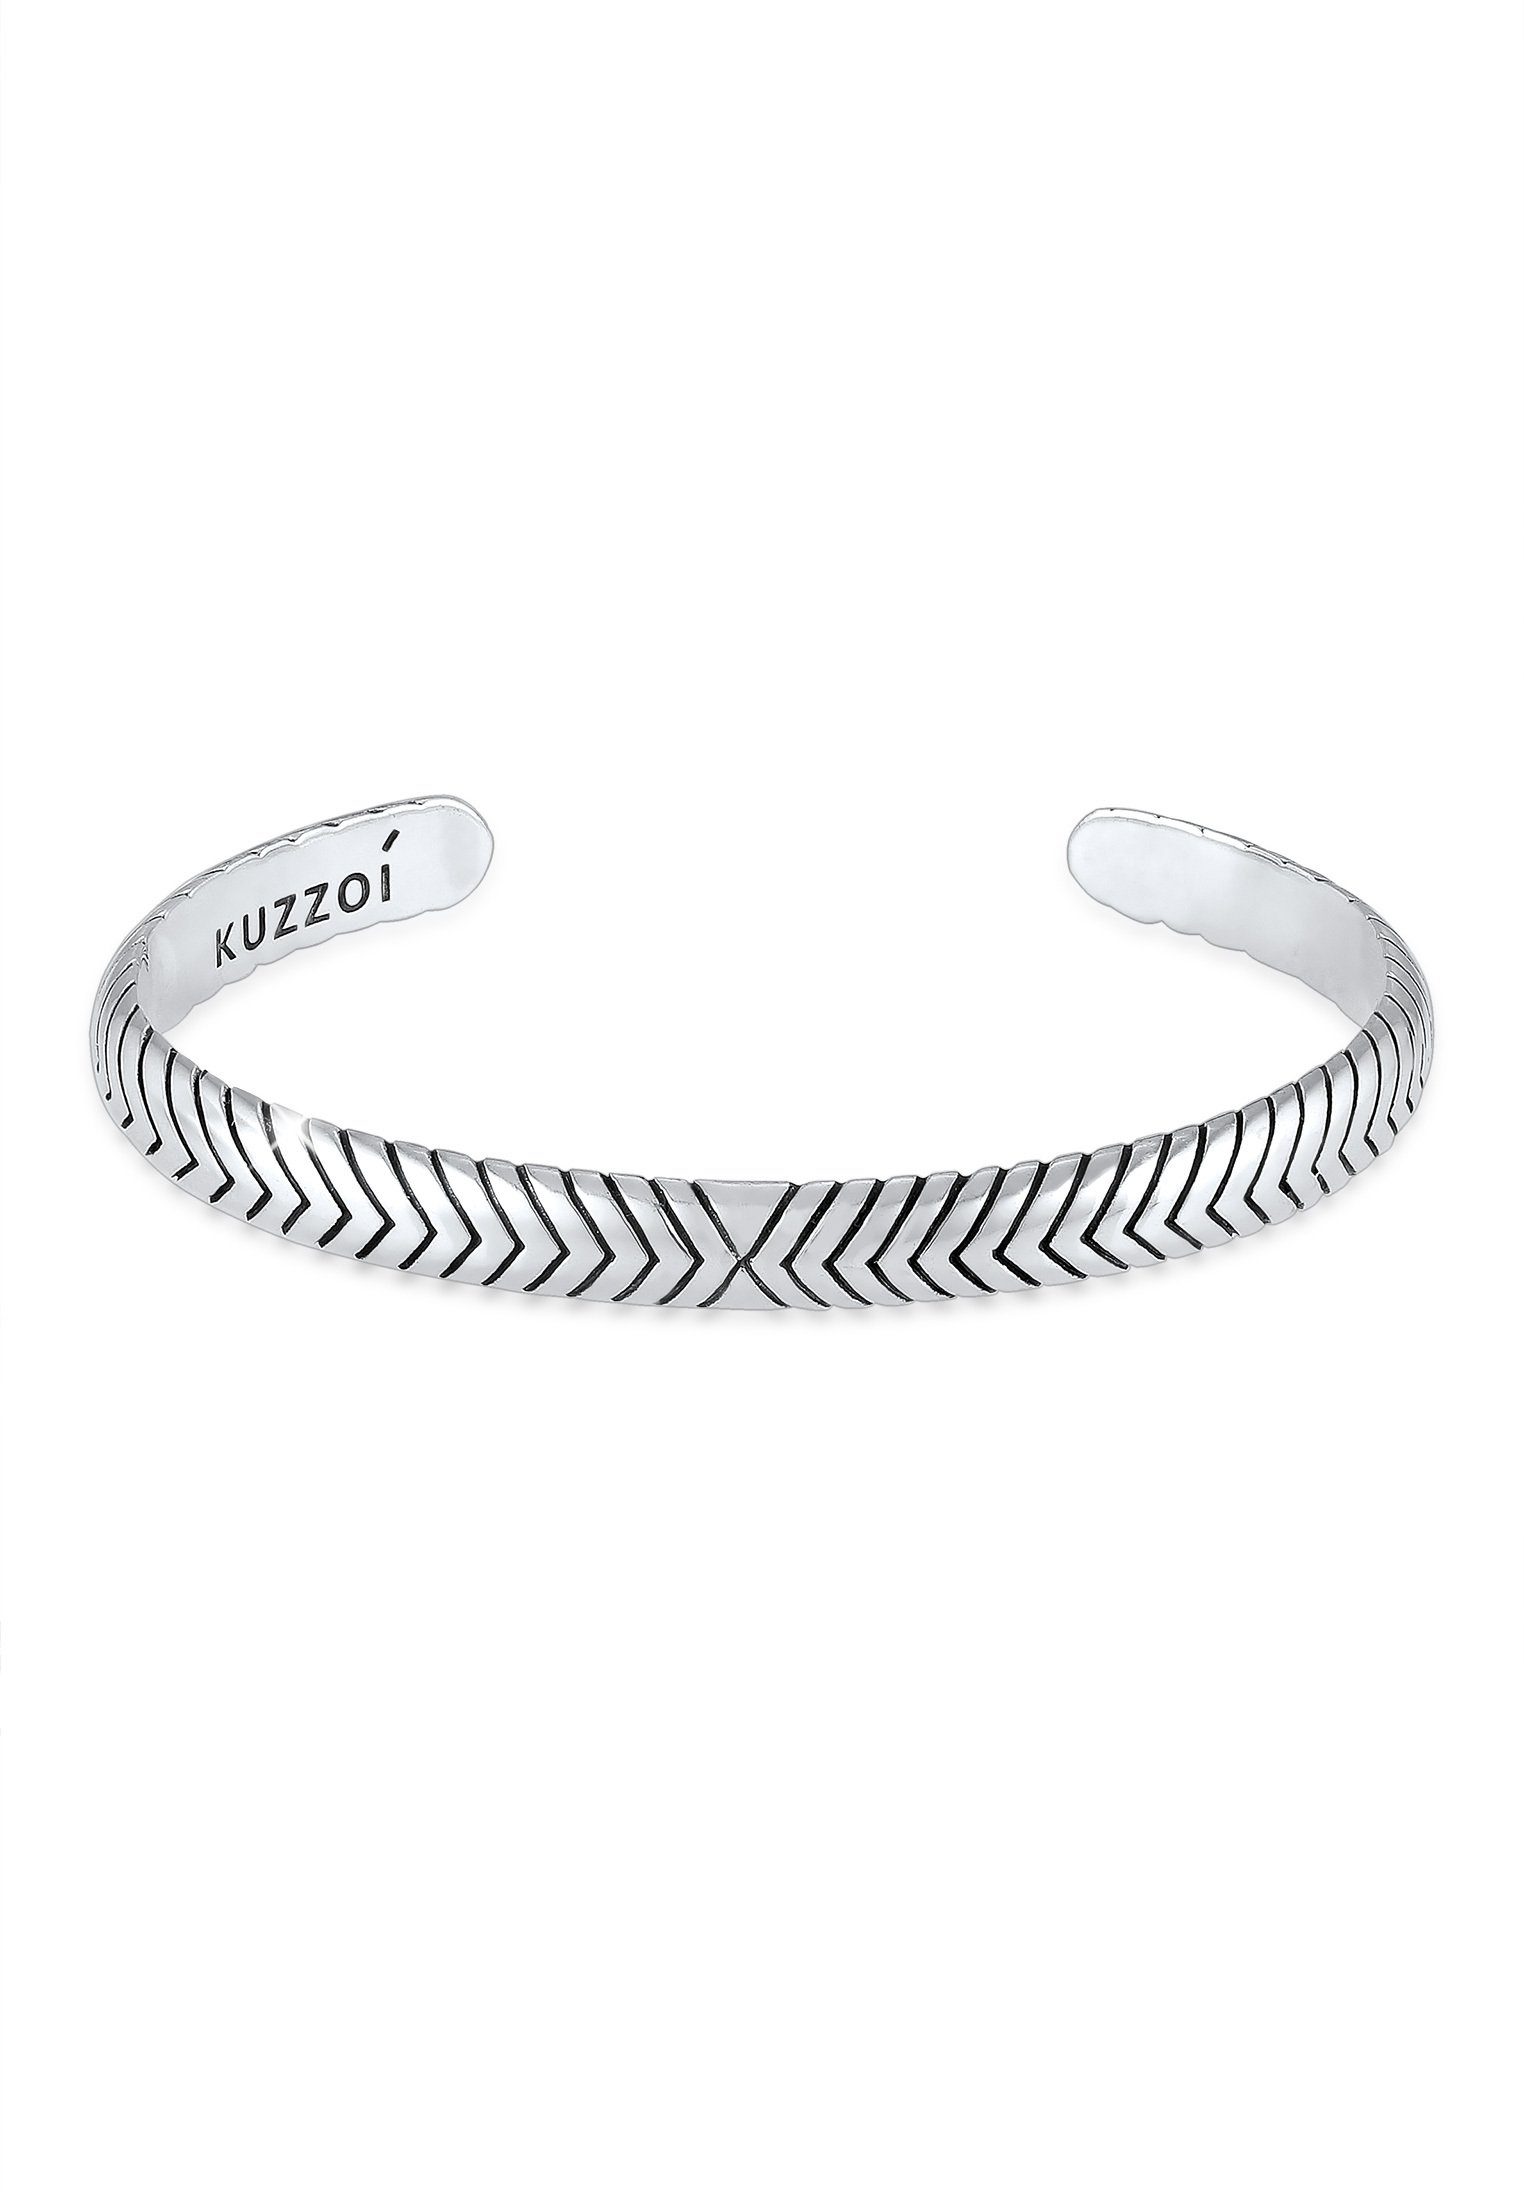 Kuzzoi Armband Herren Armreif Verstellbar Modischer 925 Design im Silber, Herren trendigen Armreif Oxidiert für